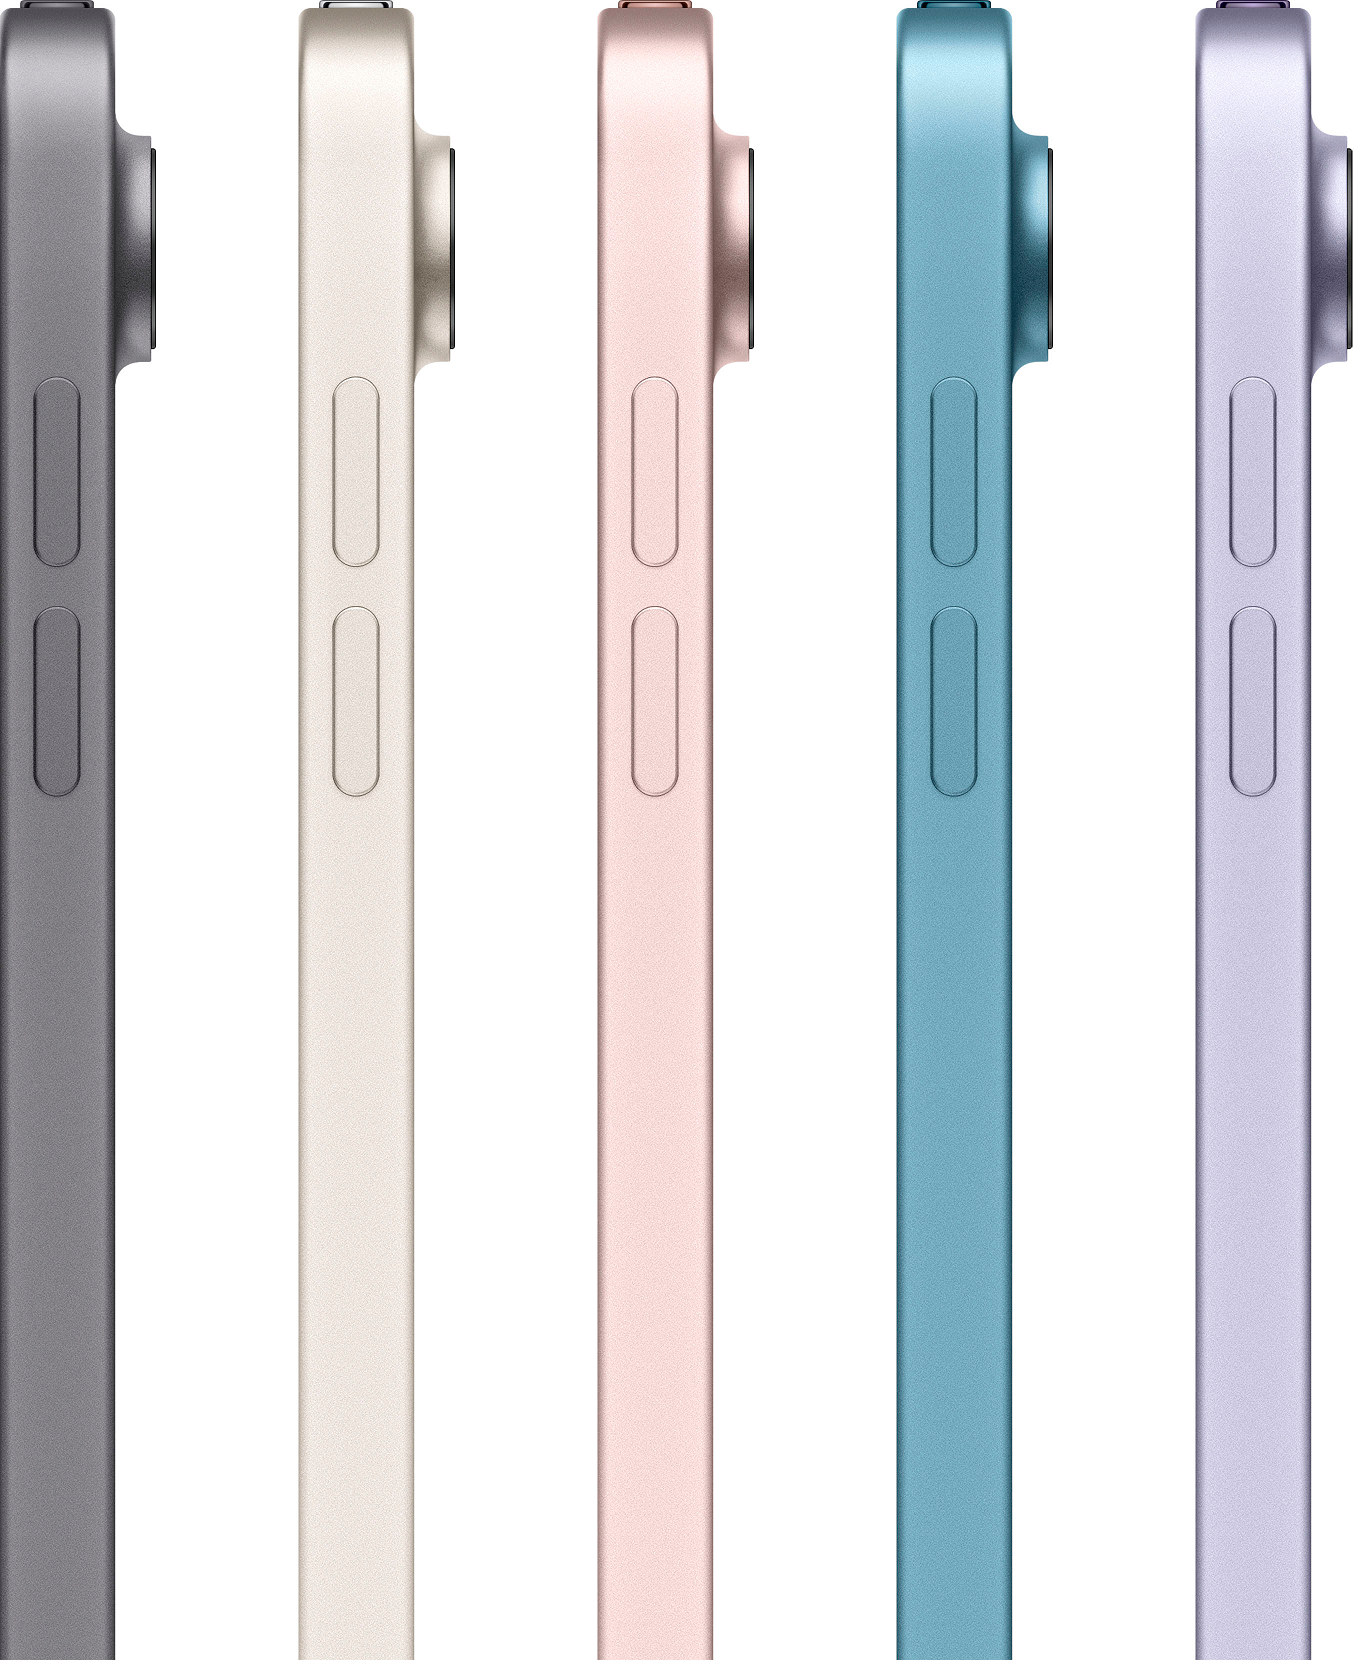 Apple - 10.9-Inch iPad Air - Latest Model - (5th Generation) with Wi-Fi - 64GB - Purple